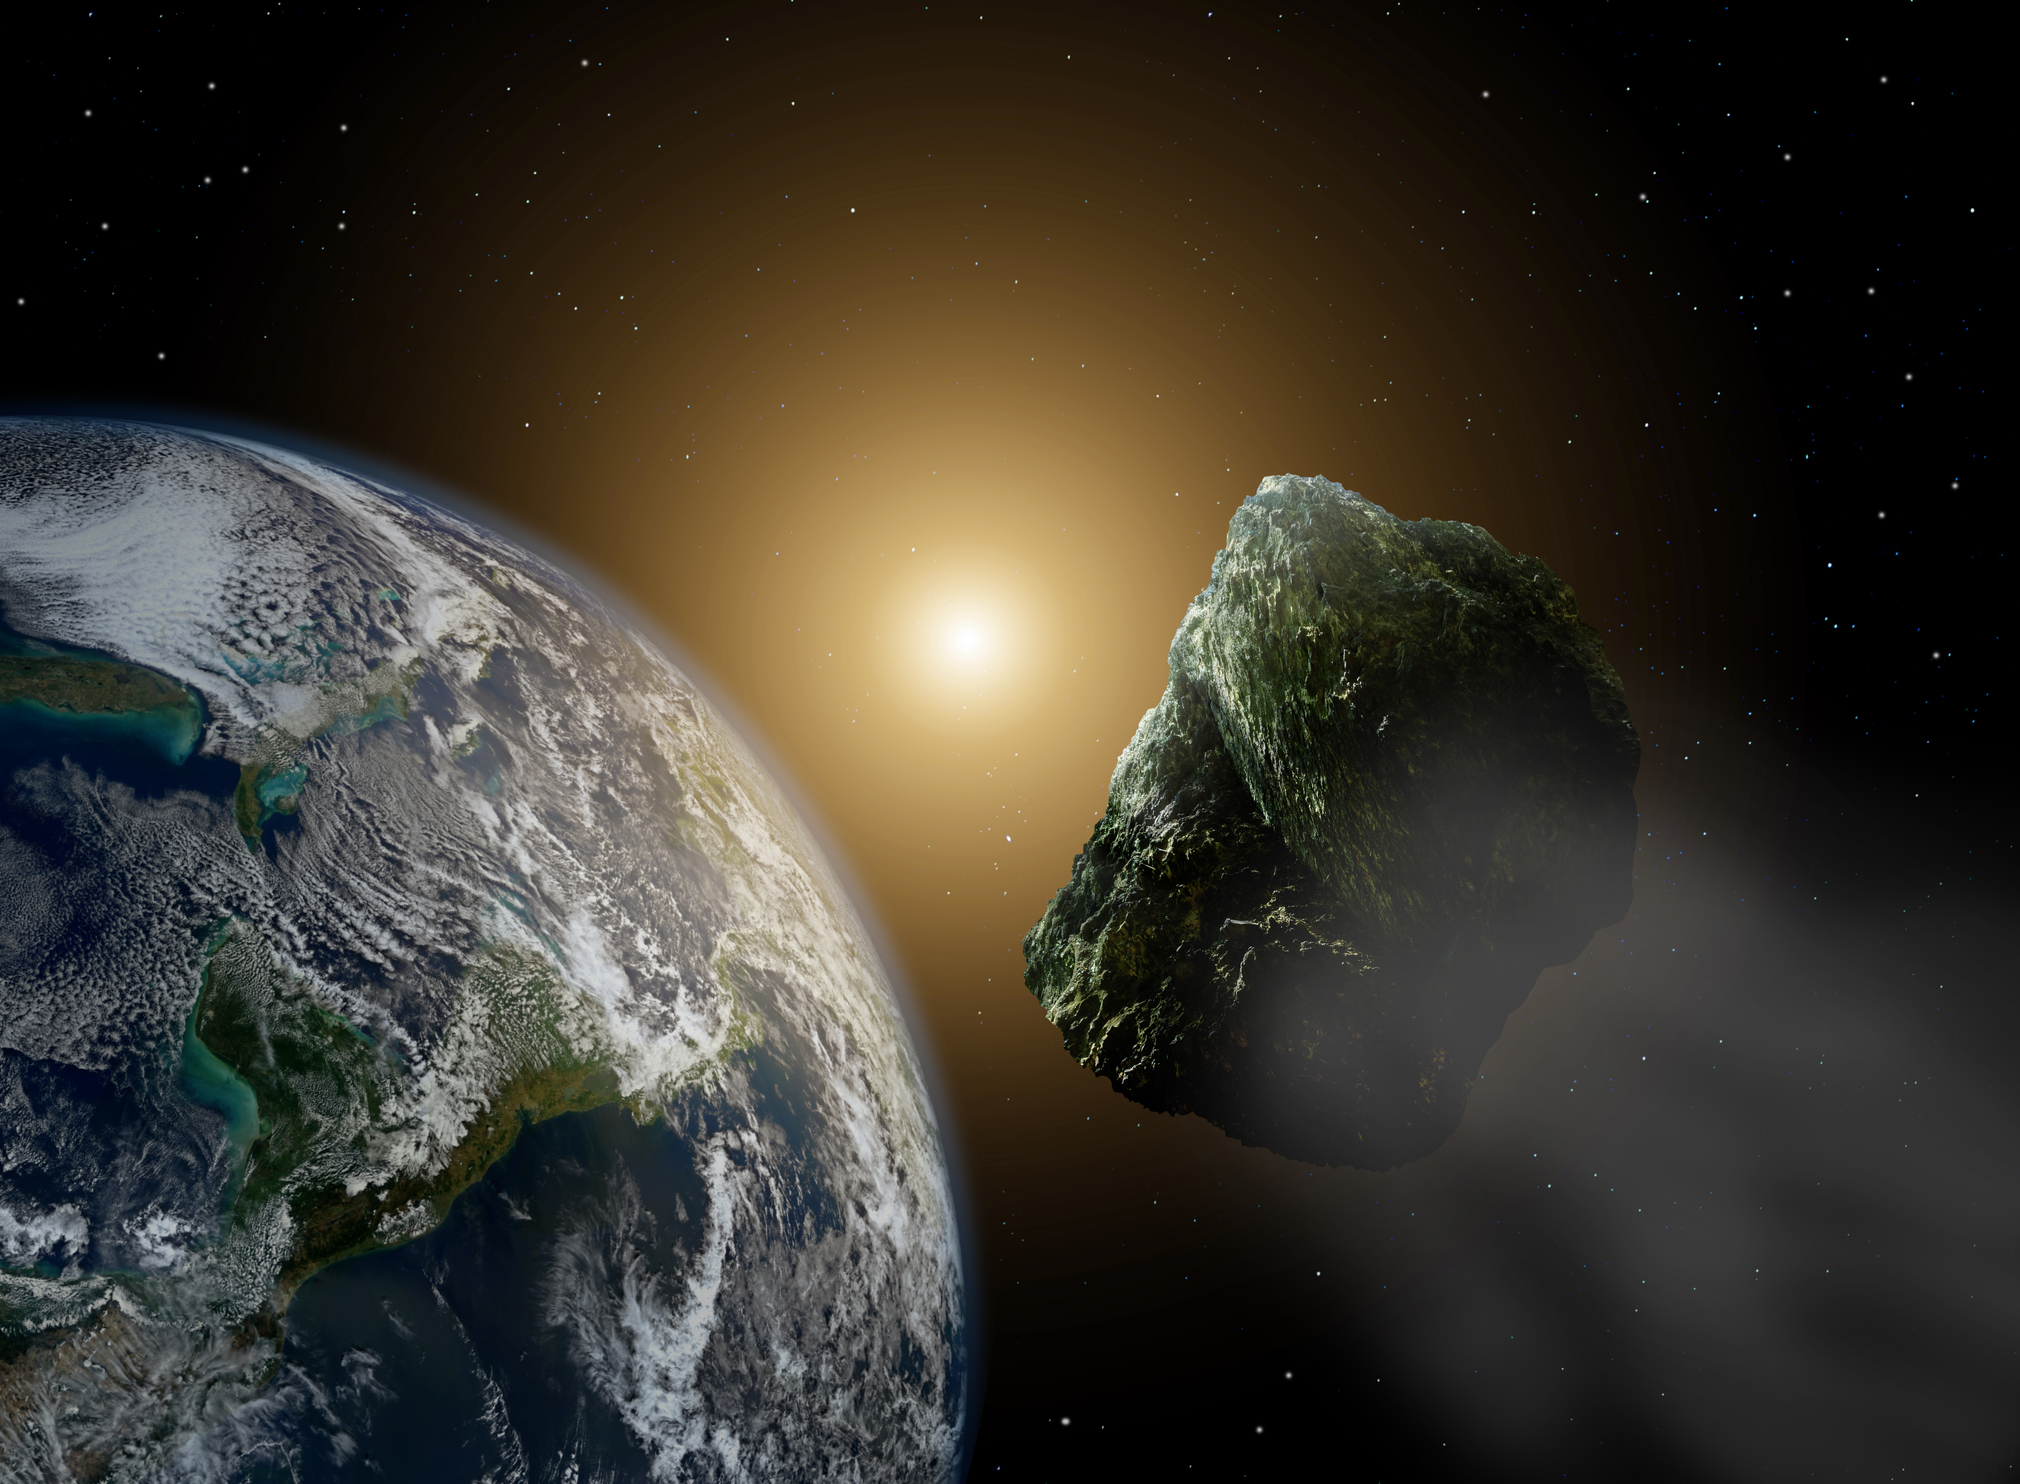 iStock image / Asteroid mining not a million miles away